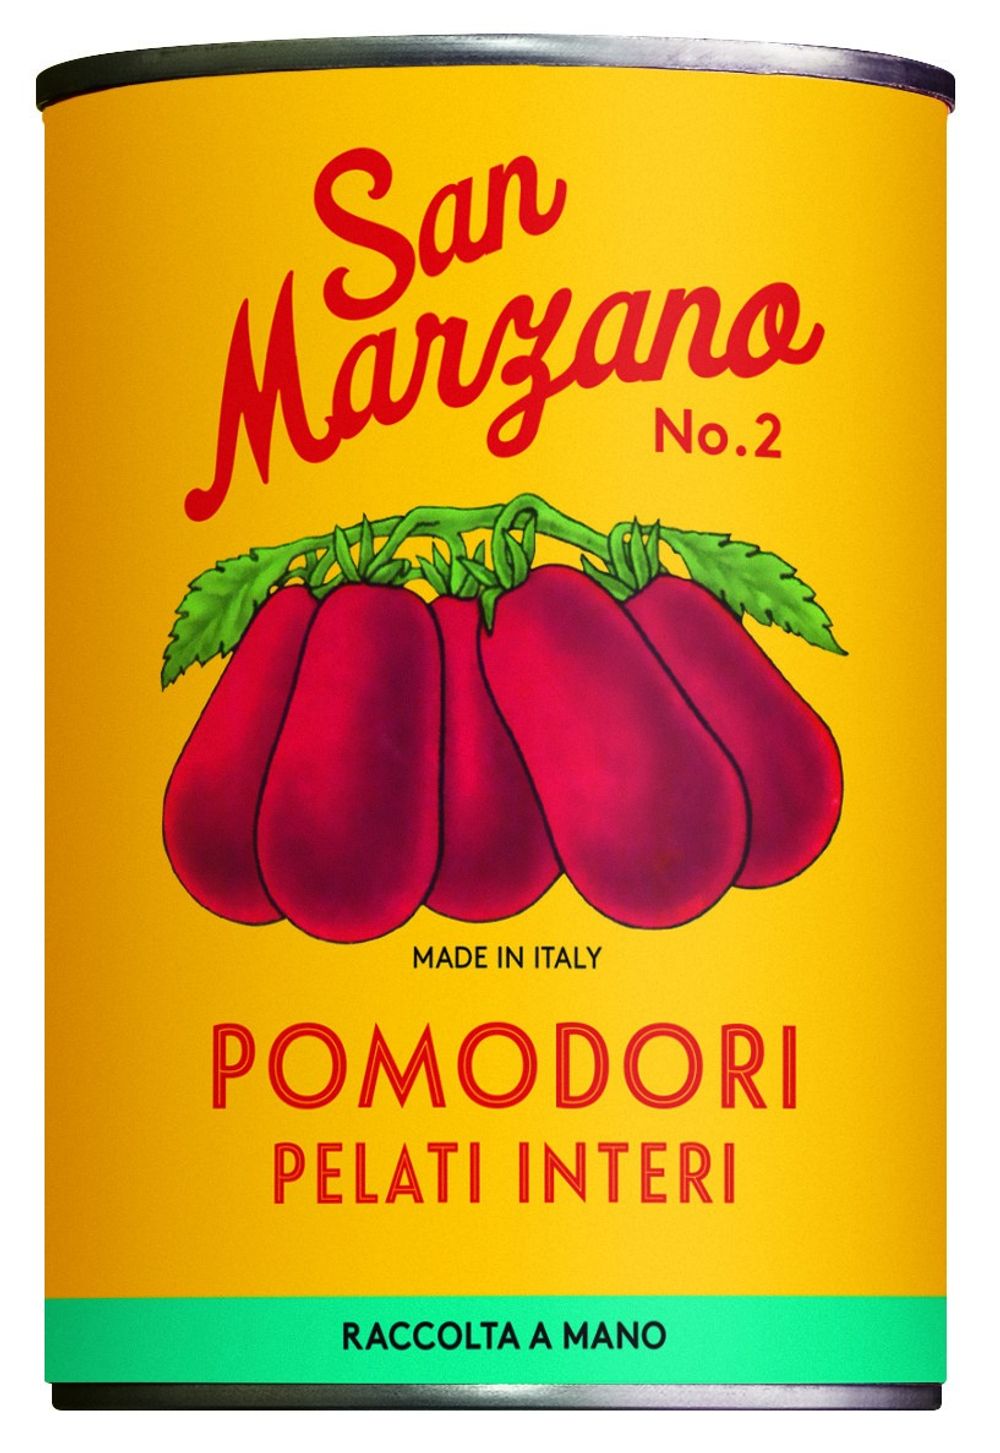 San Marzano No.2 Tomatoes (Whole Peeled)